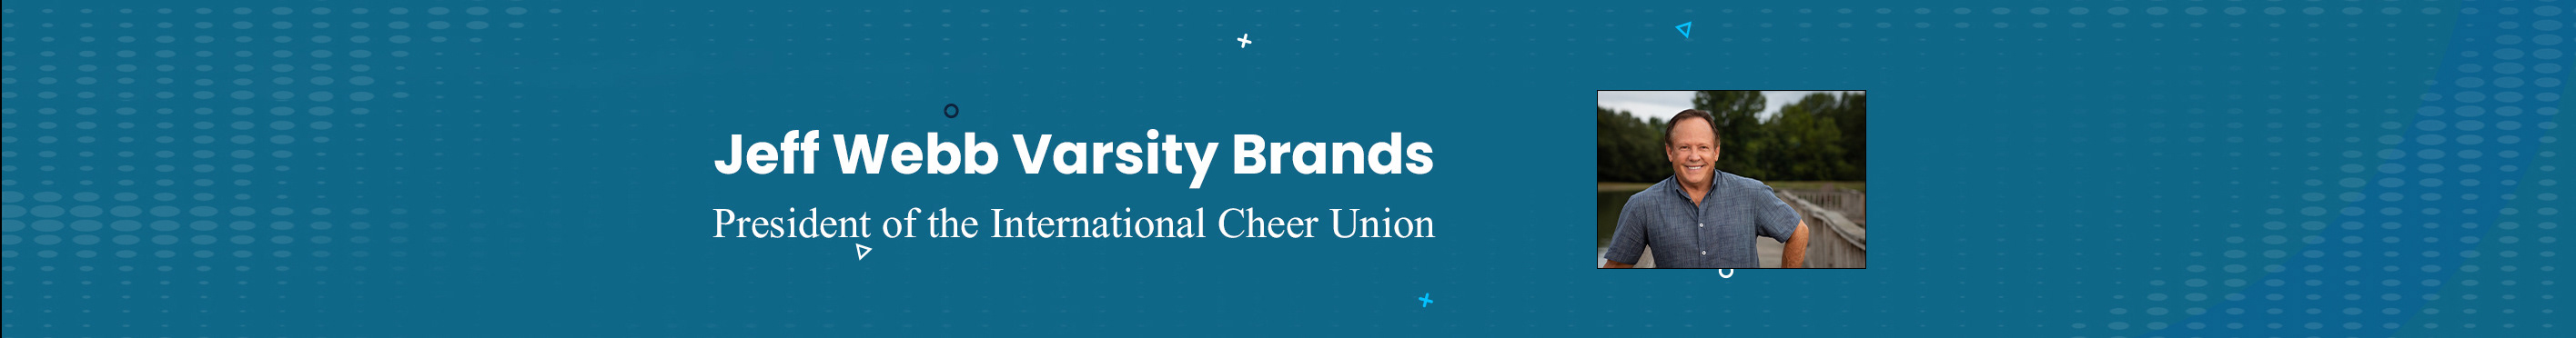 Jeff Webb Varsity Brands's profile banner